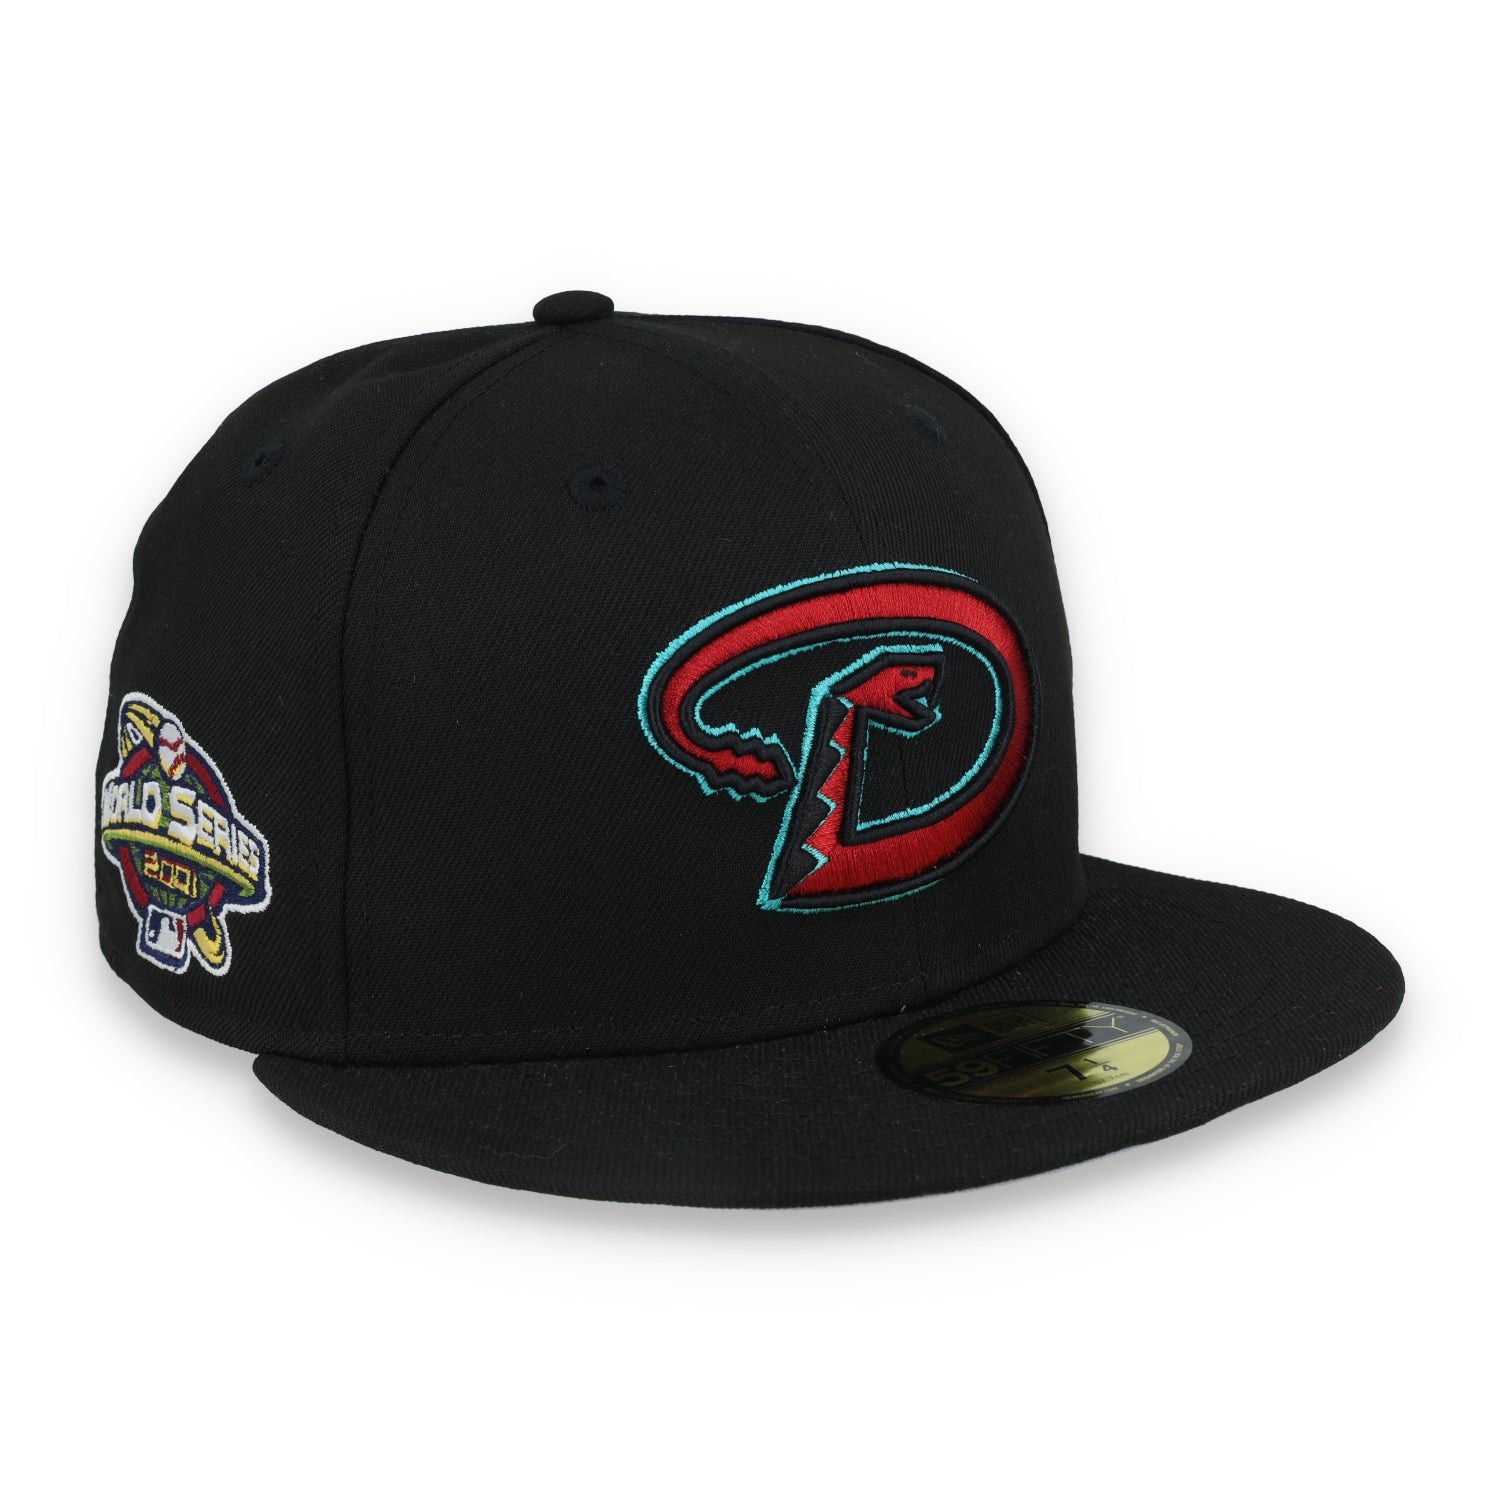 New Era Arizona Diamondbacks World Series 2001 59FIFTY Fitted Hat